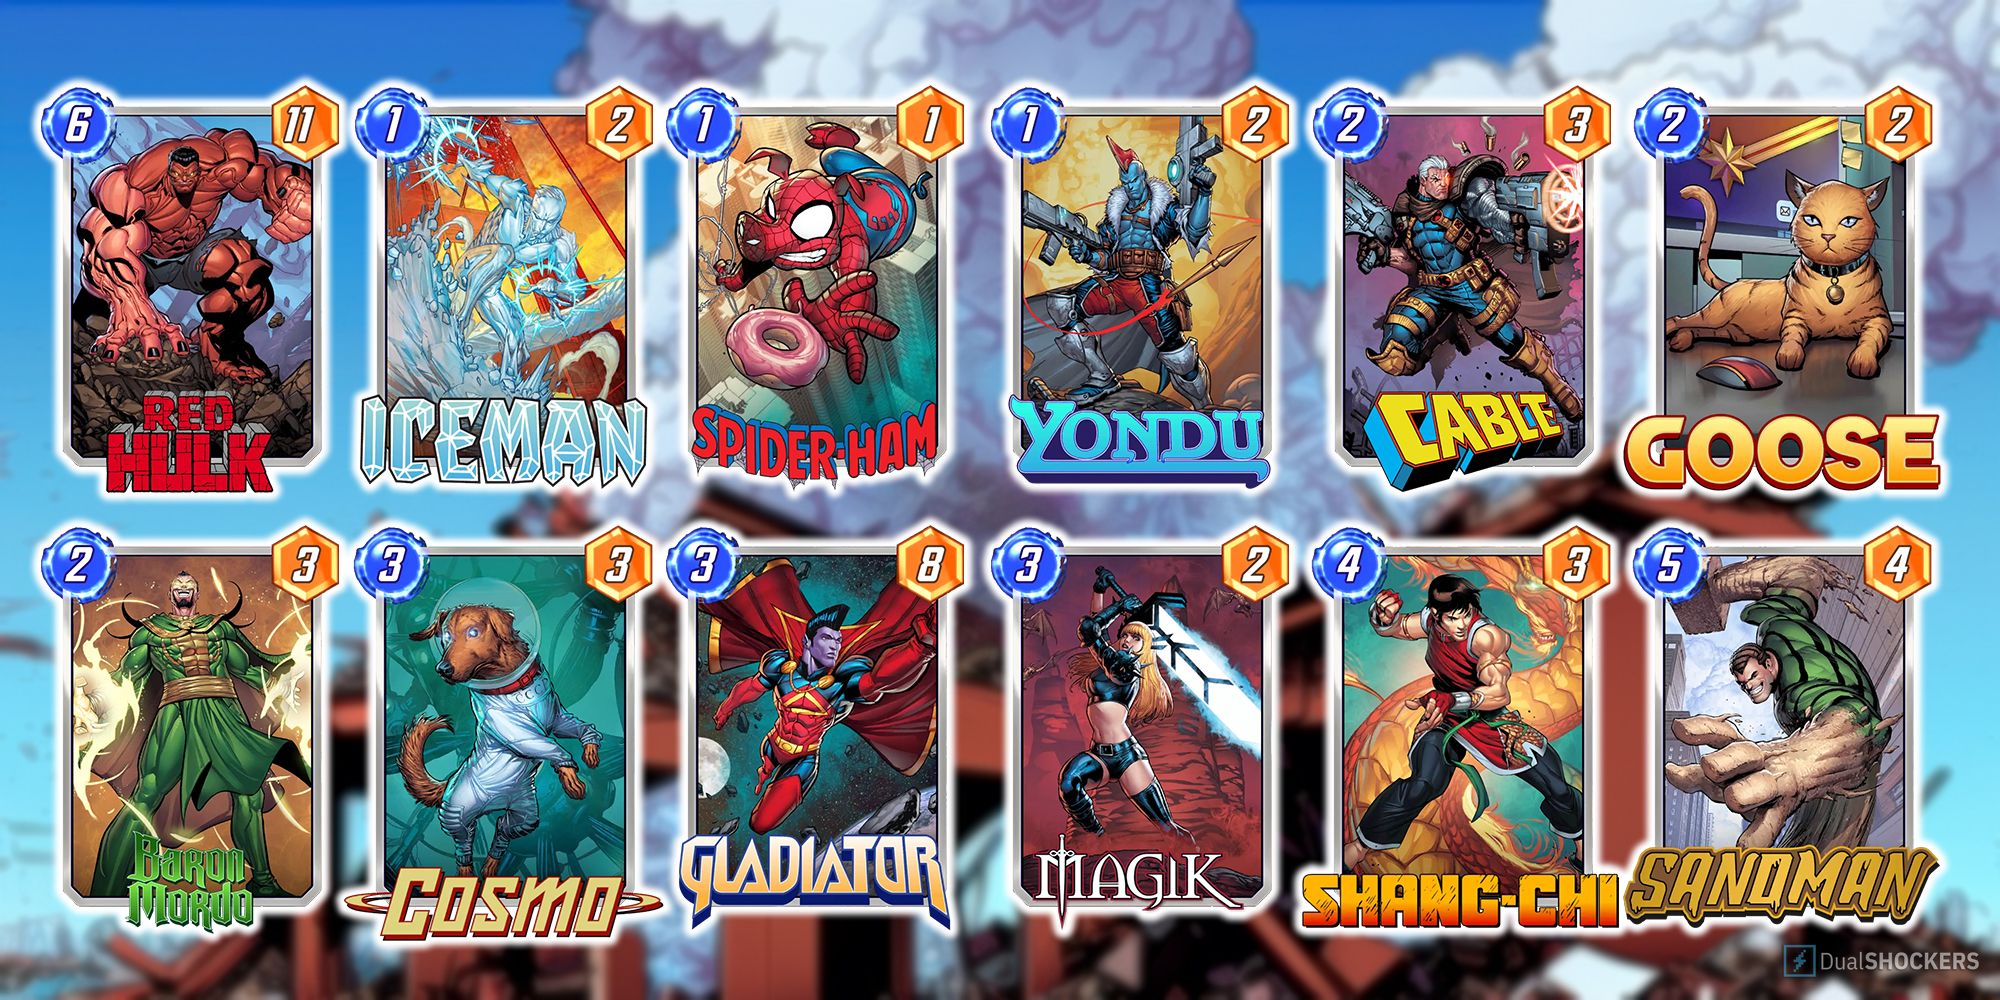 A Marvel Snap deck comprised of Red Hulk, Iceman, Spider-Ham, Yondu, Cable, Goose, Baron Mordo, Cosmo, Gladiator, Magik, Shang-Chi, and Sandman.